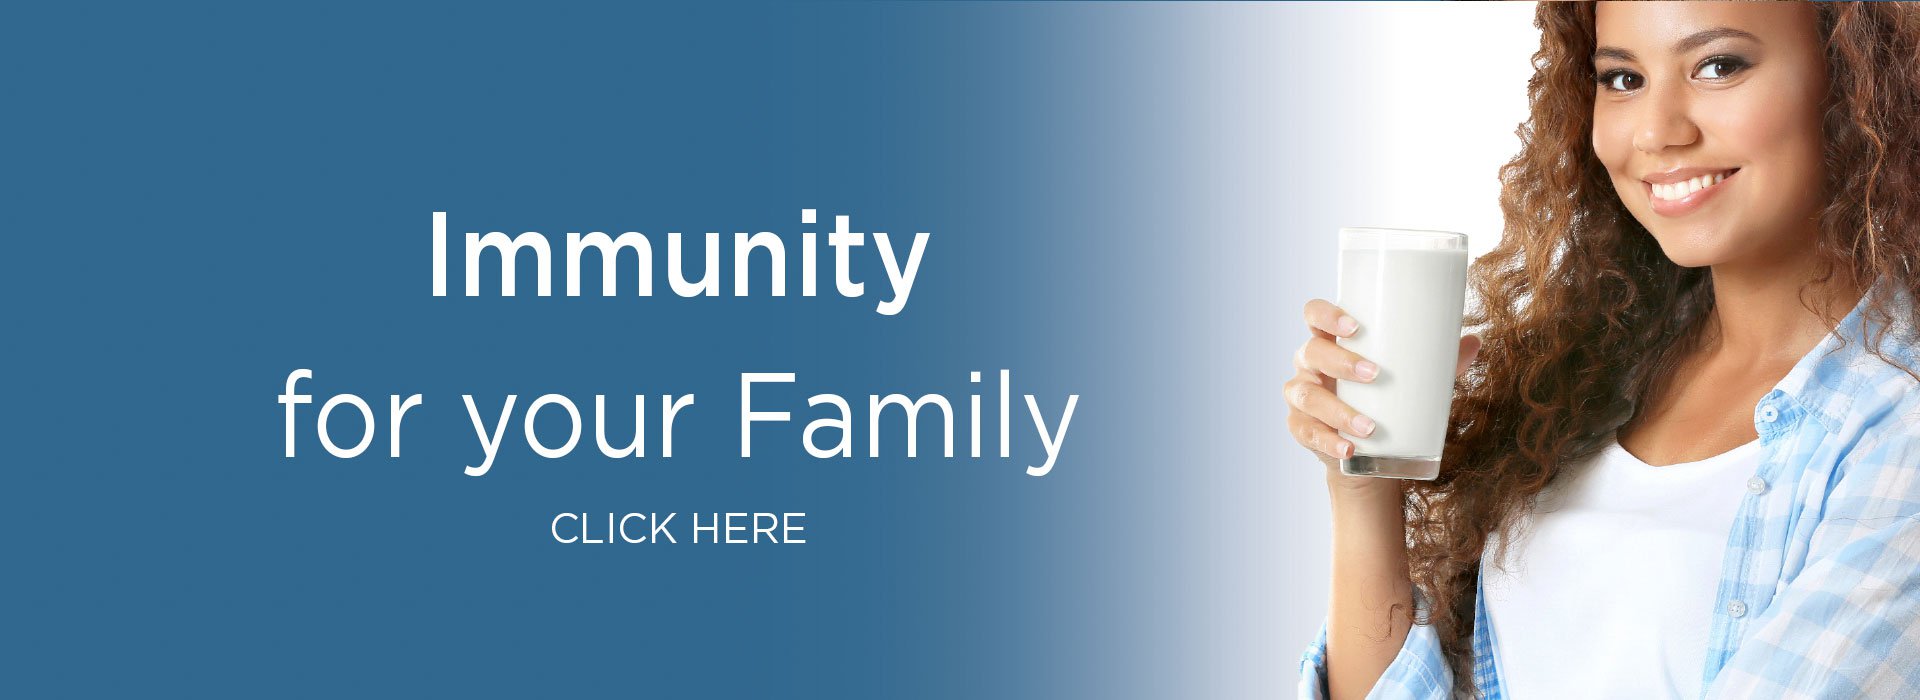 New Image International:Immunity for your Family